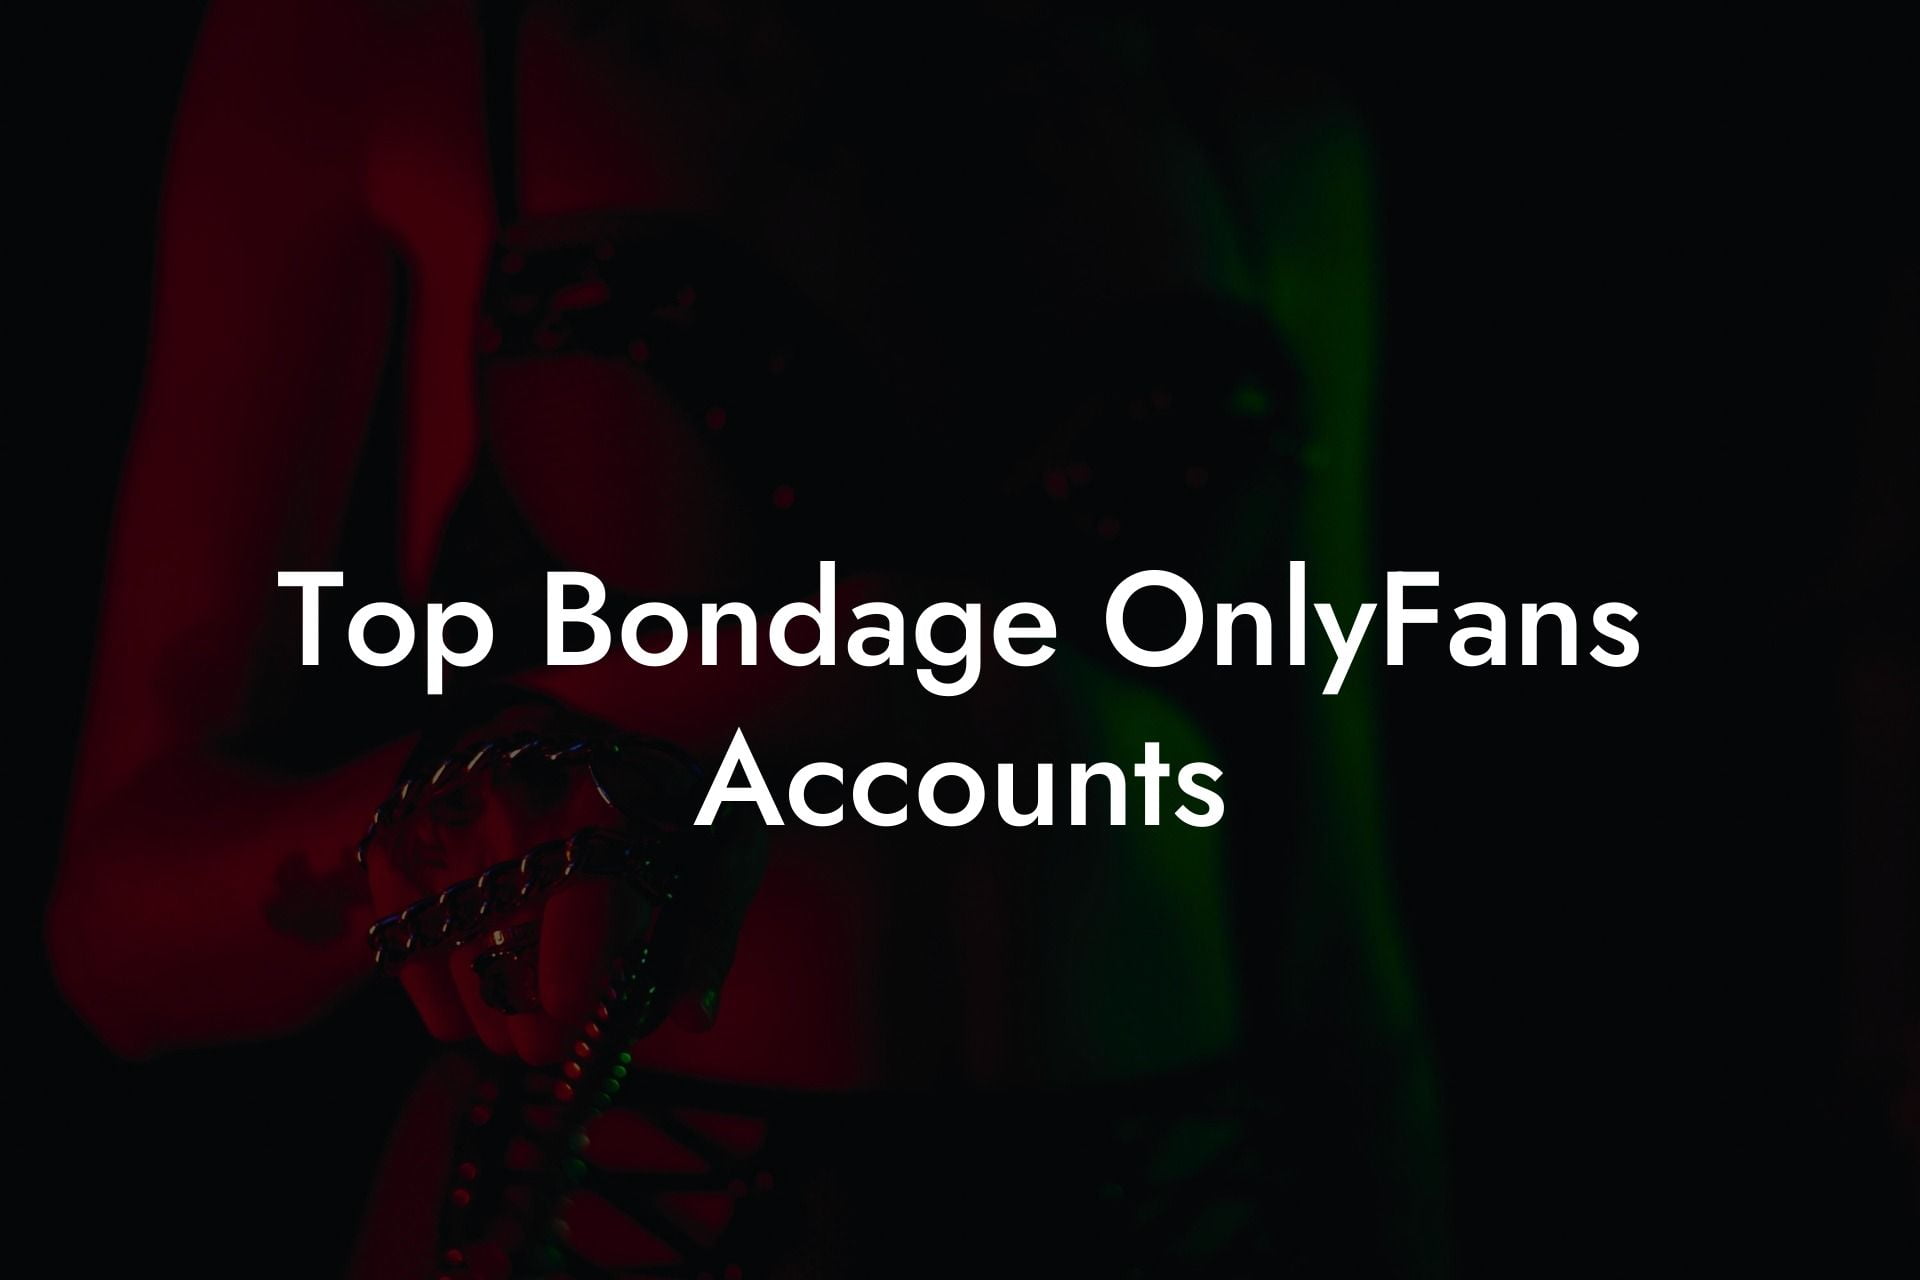 Top Bondage OnlyFans Accounts